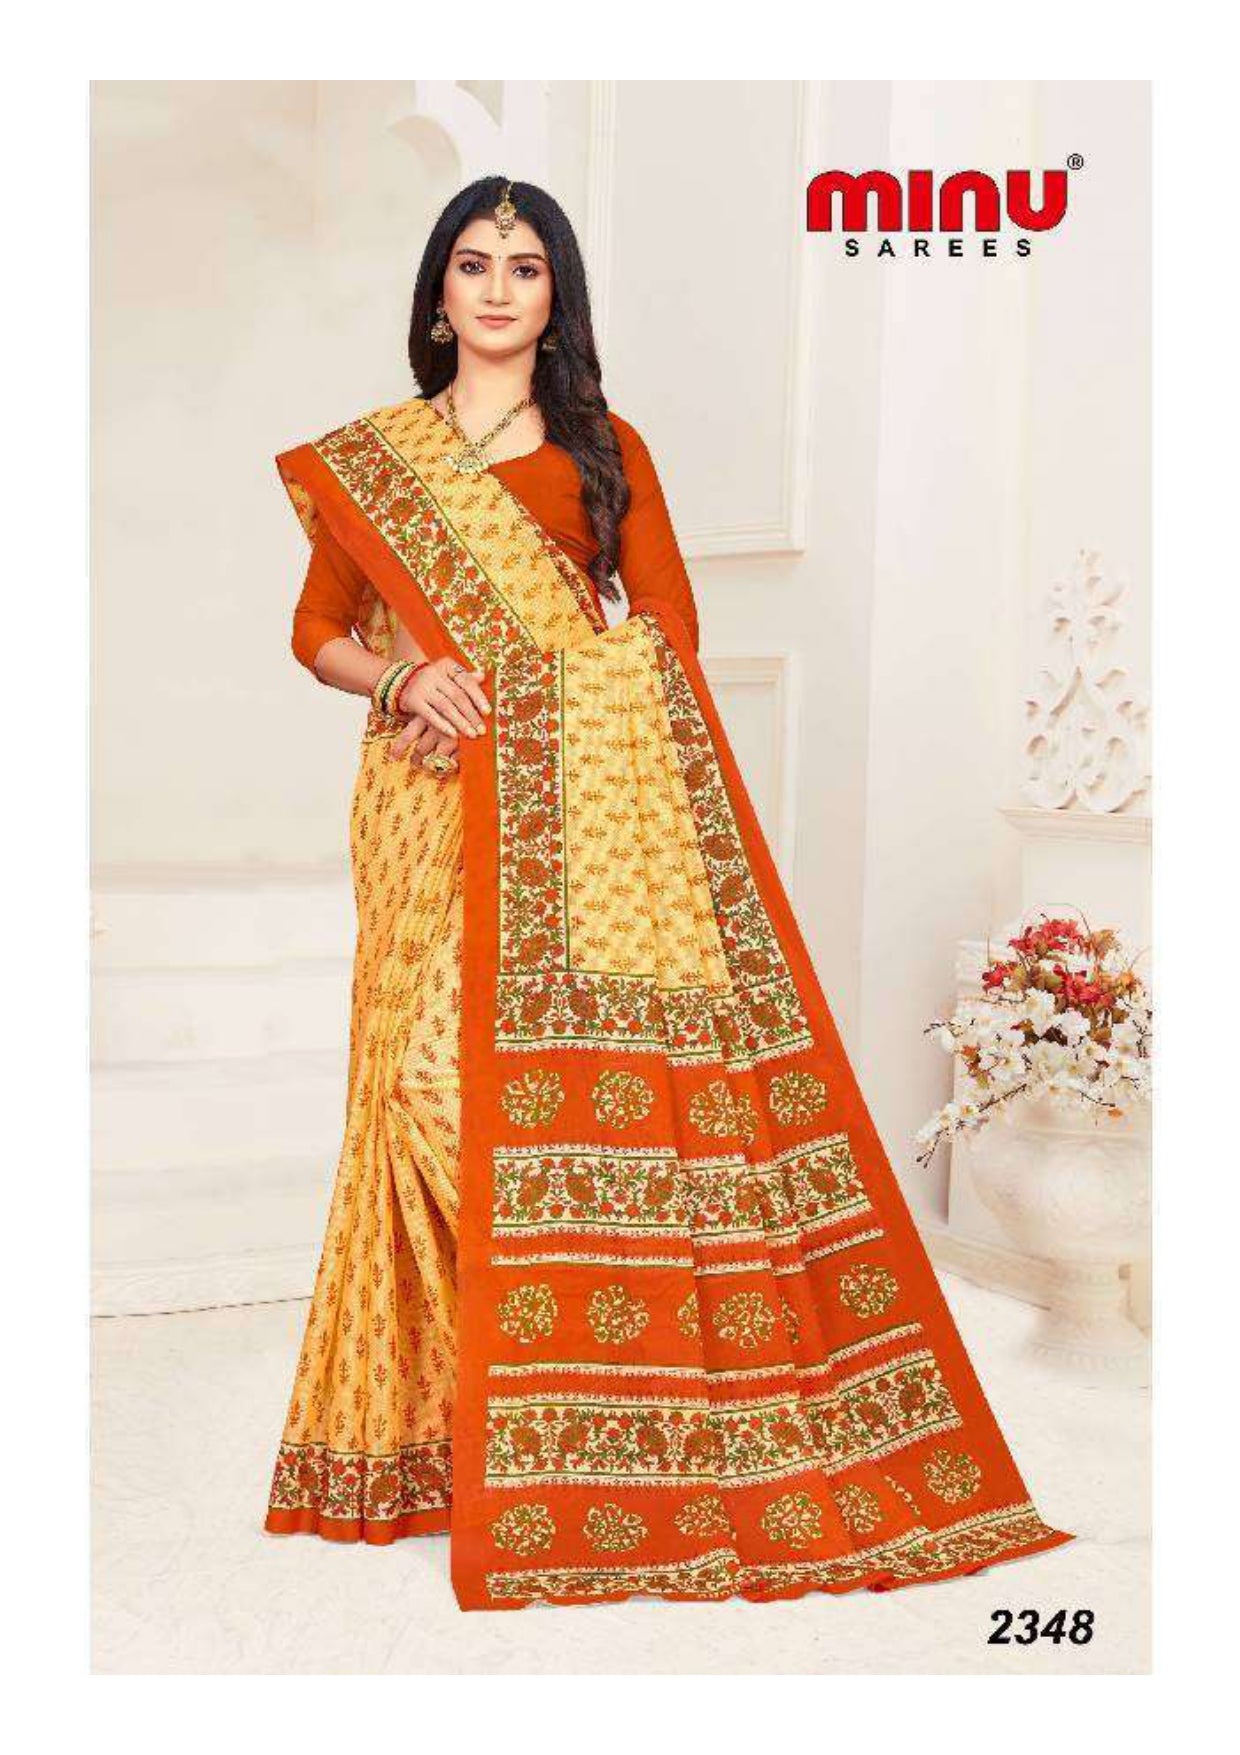 Bold color printed saree wearing woman